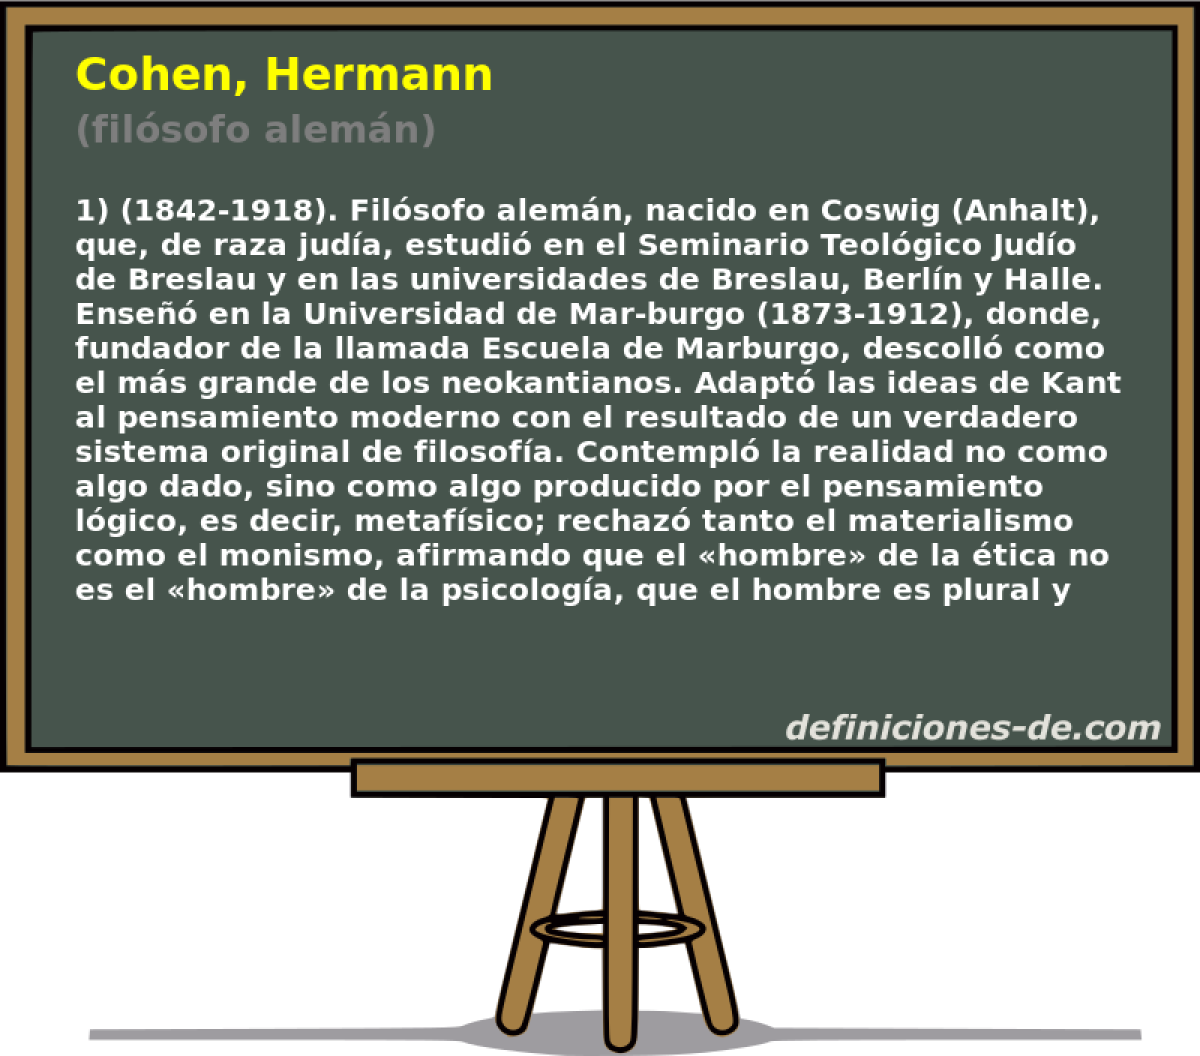 Cohen, Hermann (filsofo alemn)